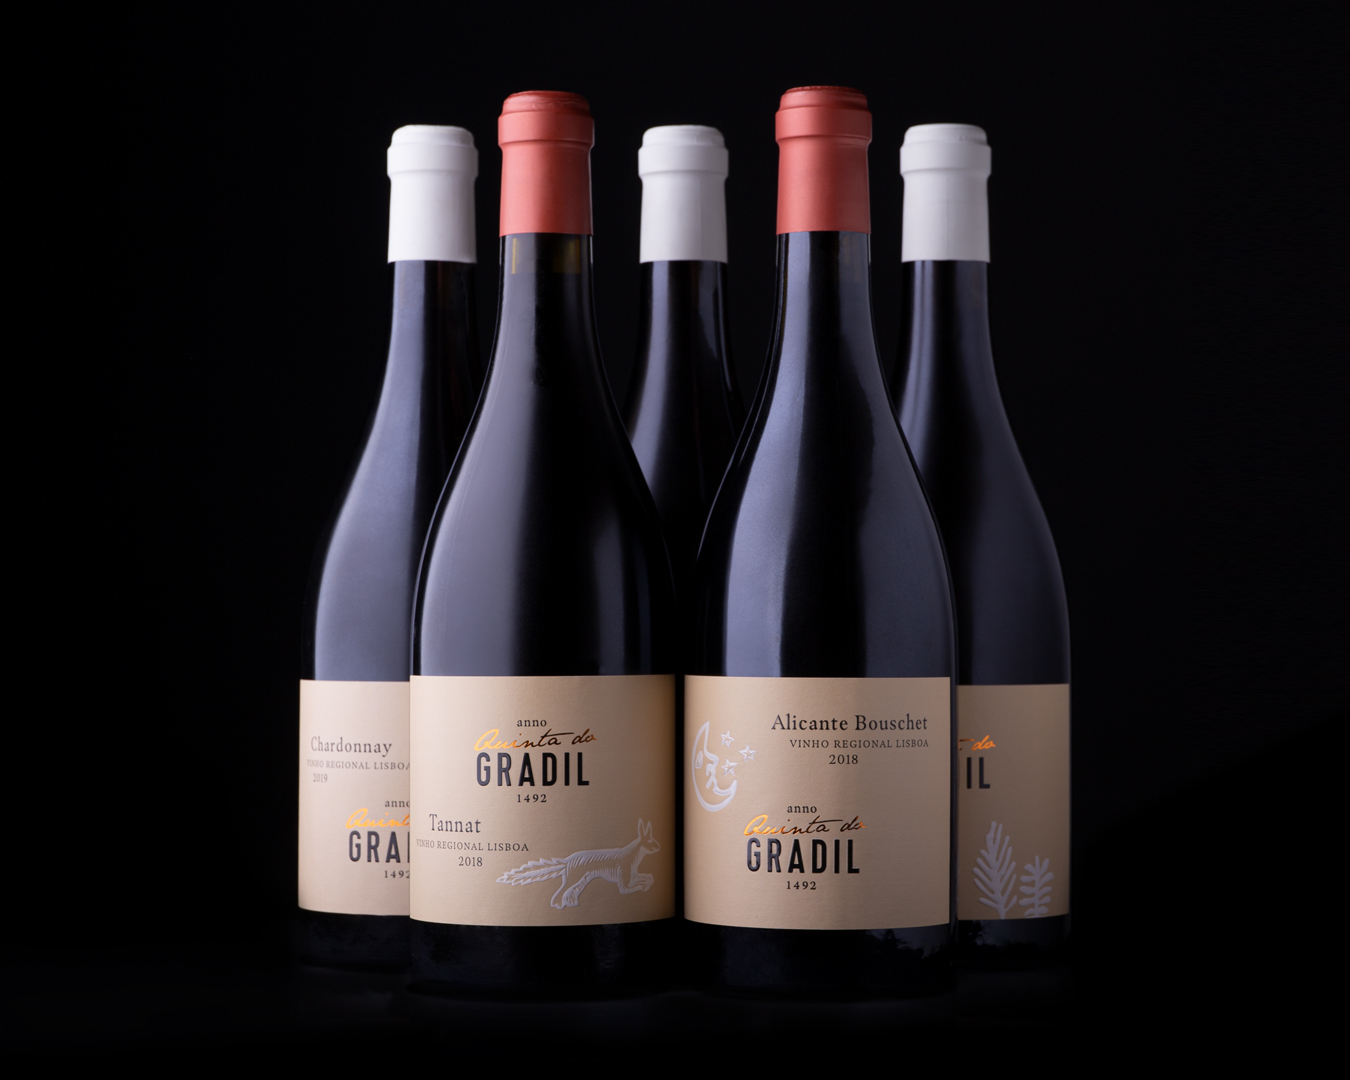 Quinta_do_Gradil wine bottles ritarivotti design